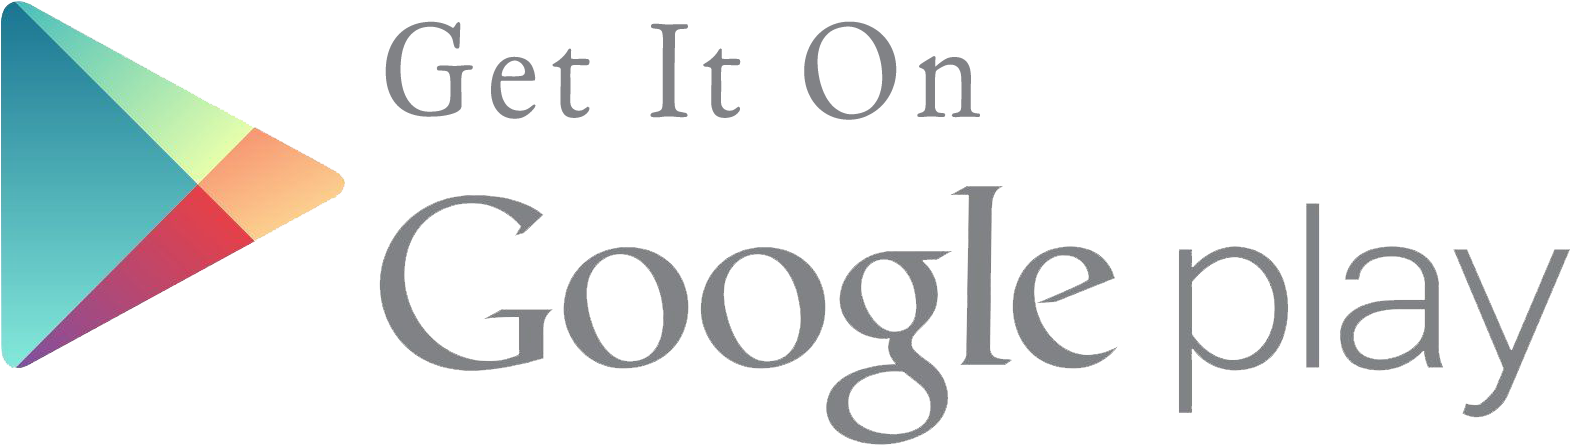 Moboquiz Logo - Google Play Clipart (1920x1080), Png Download